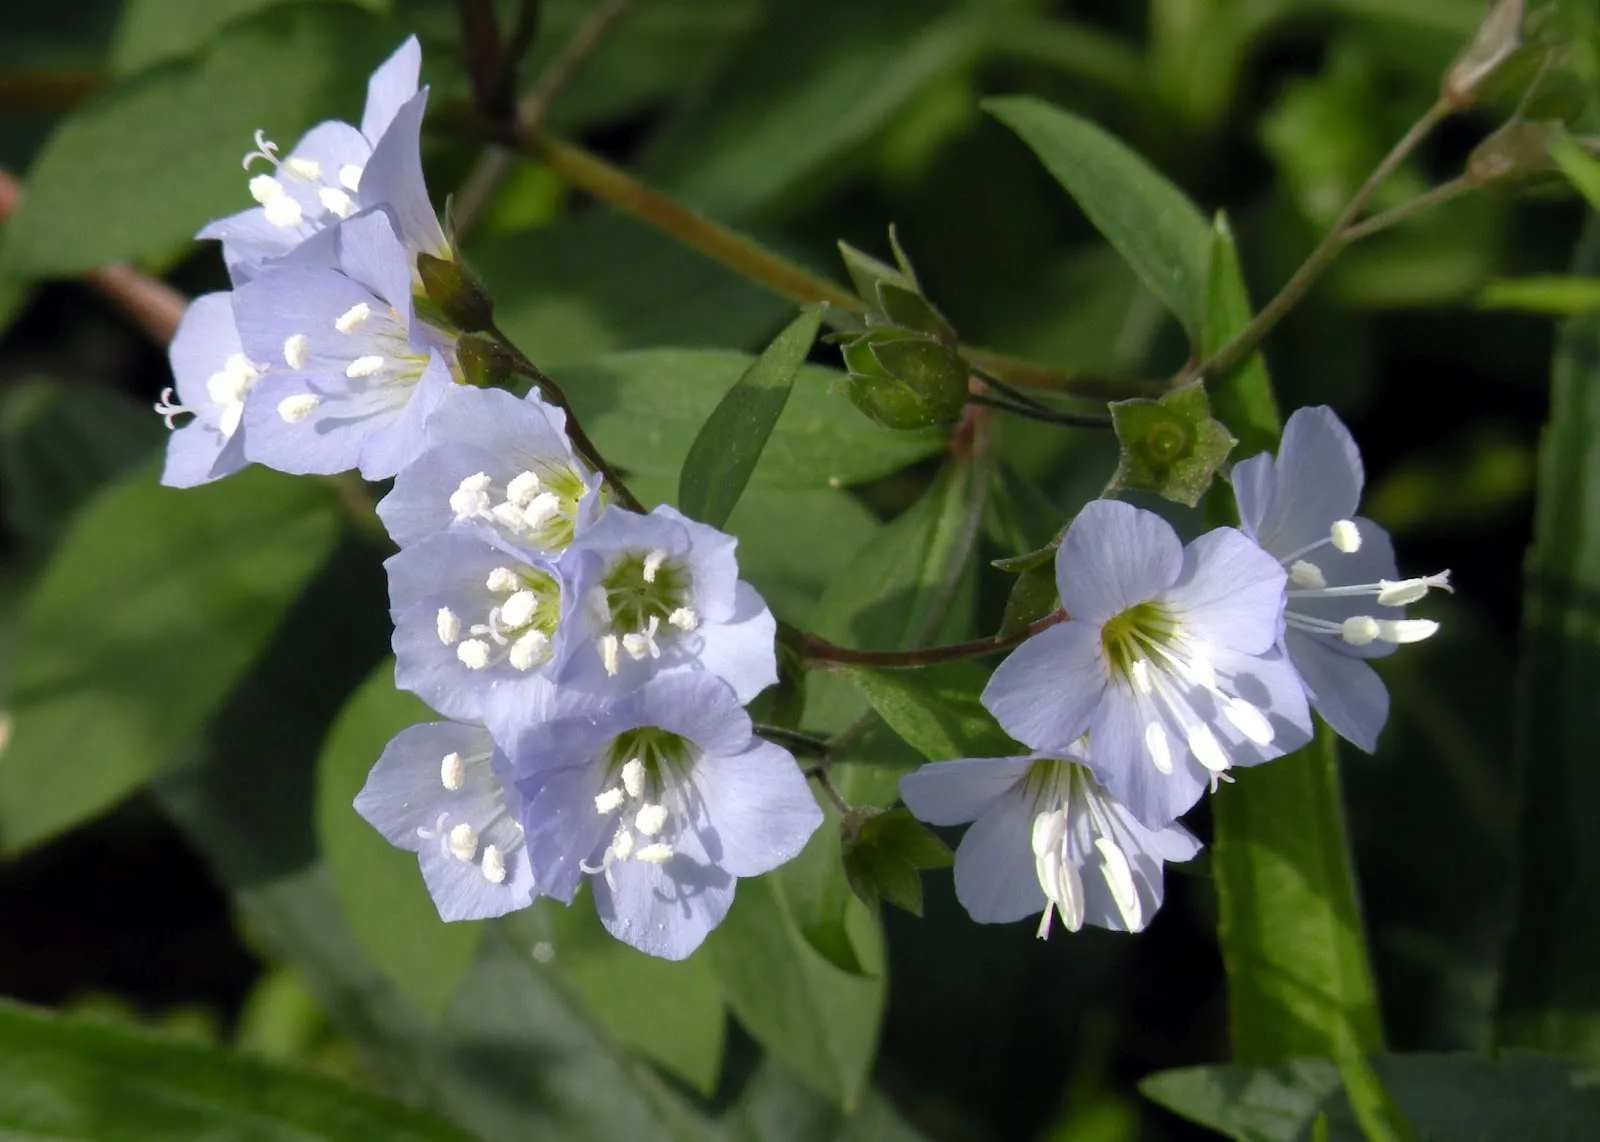 How to Care for Jacobs Ladder Flower (Polemonium Caeruleum)?